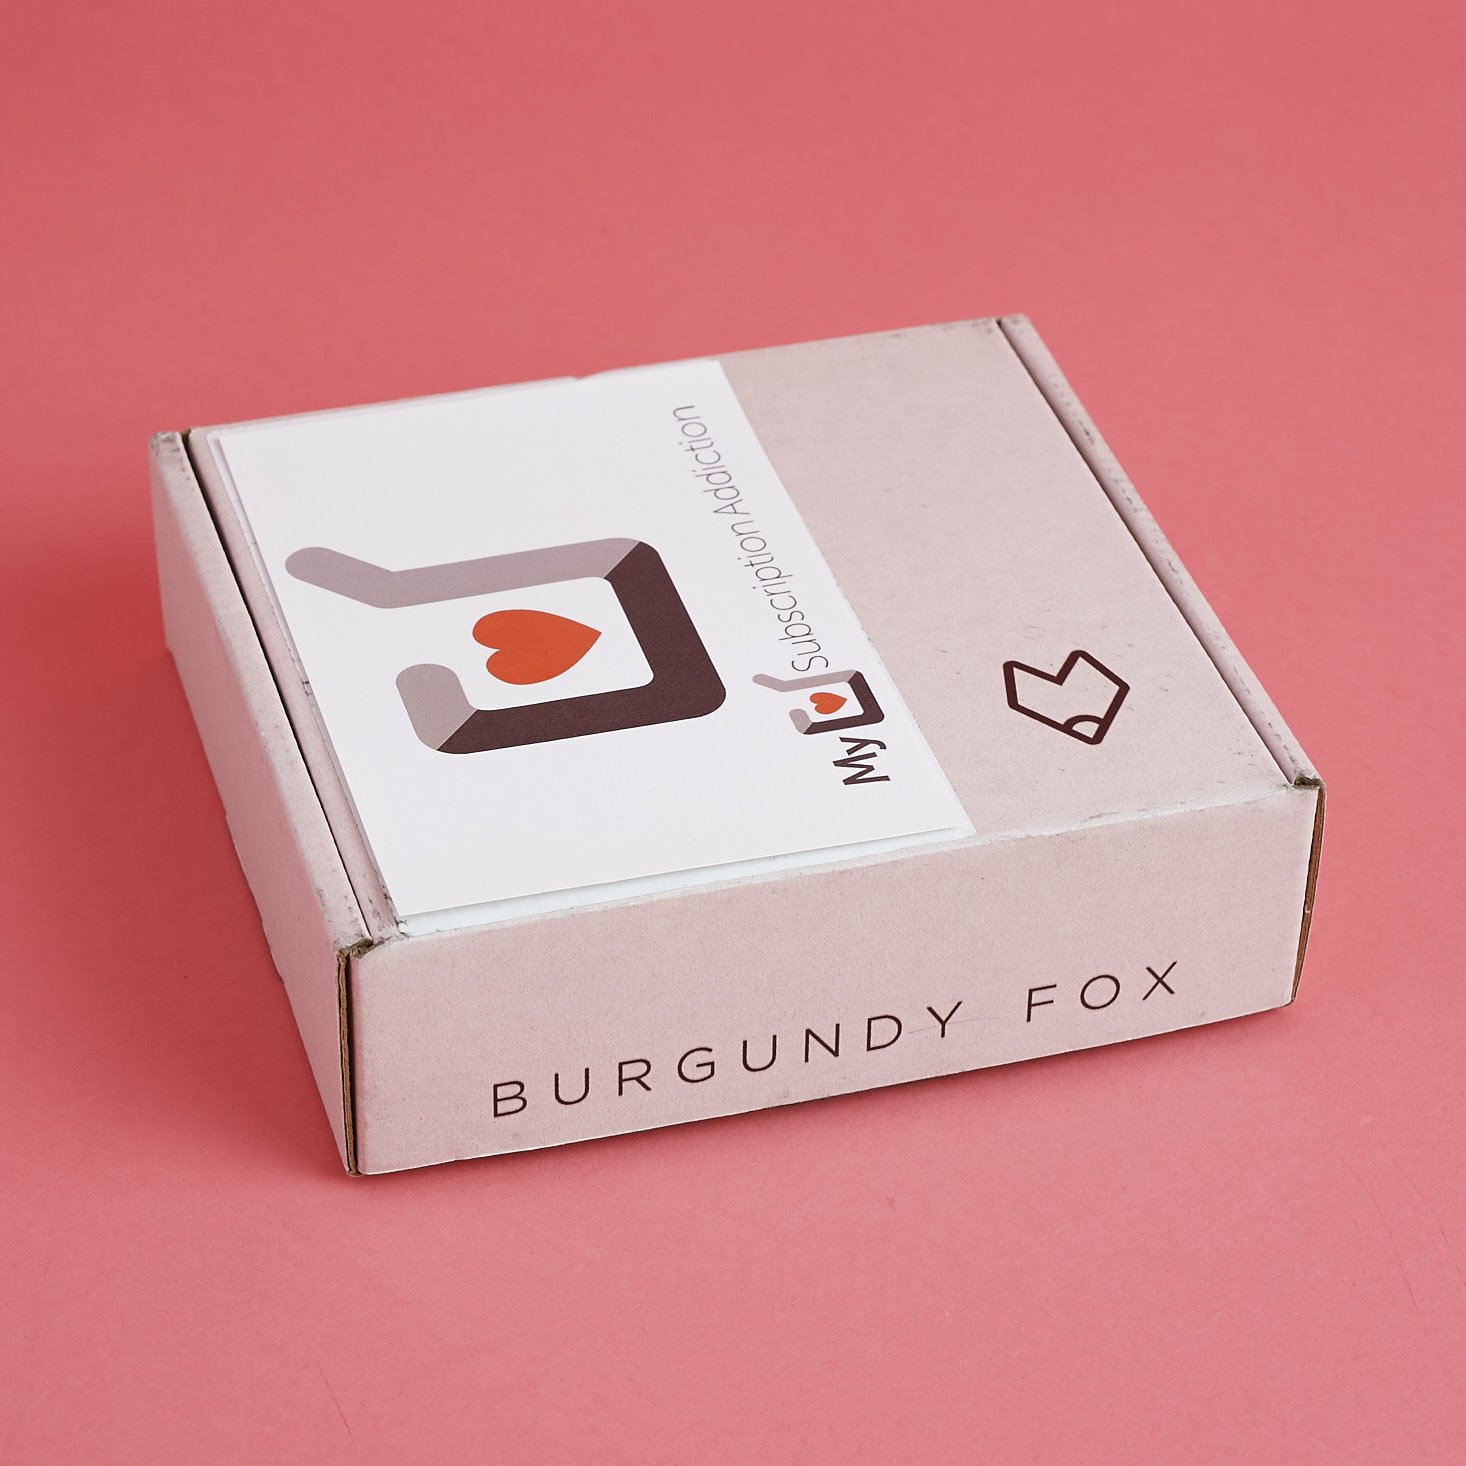 Burgundy Fox Underwear Subscription Review – April 2018